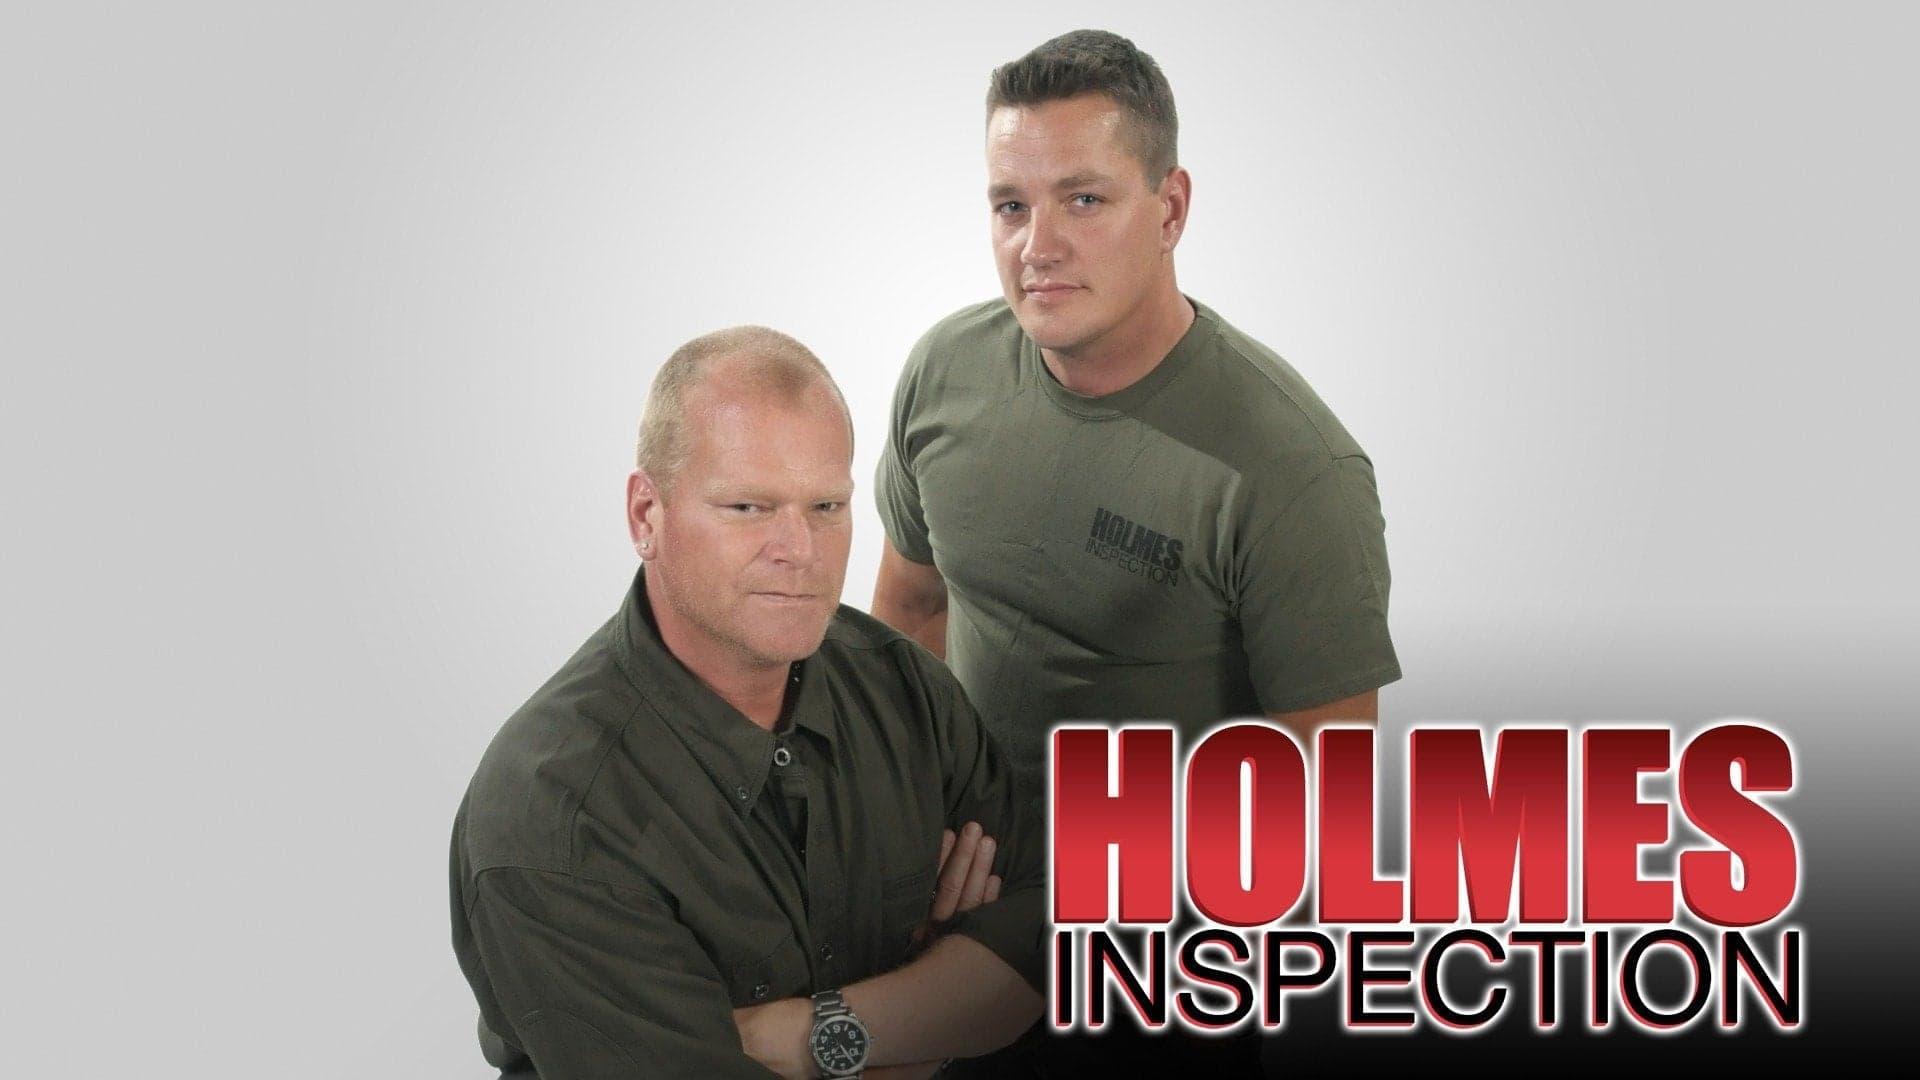 Holmes Inspection backdrop